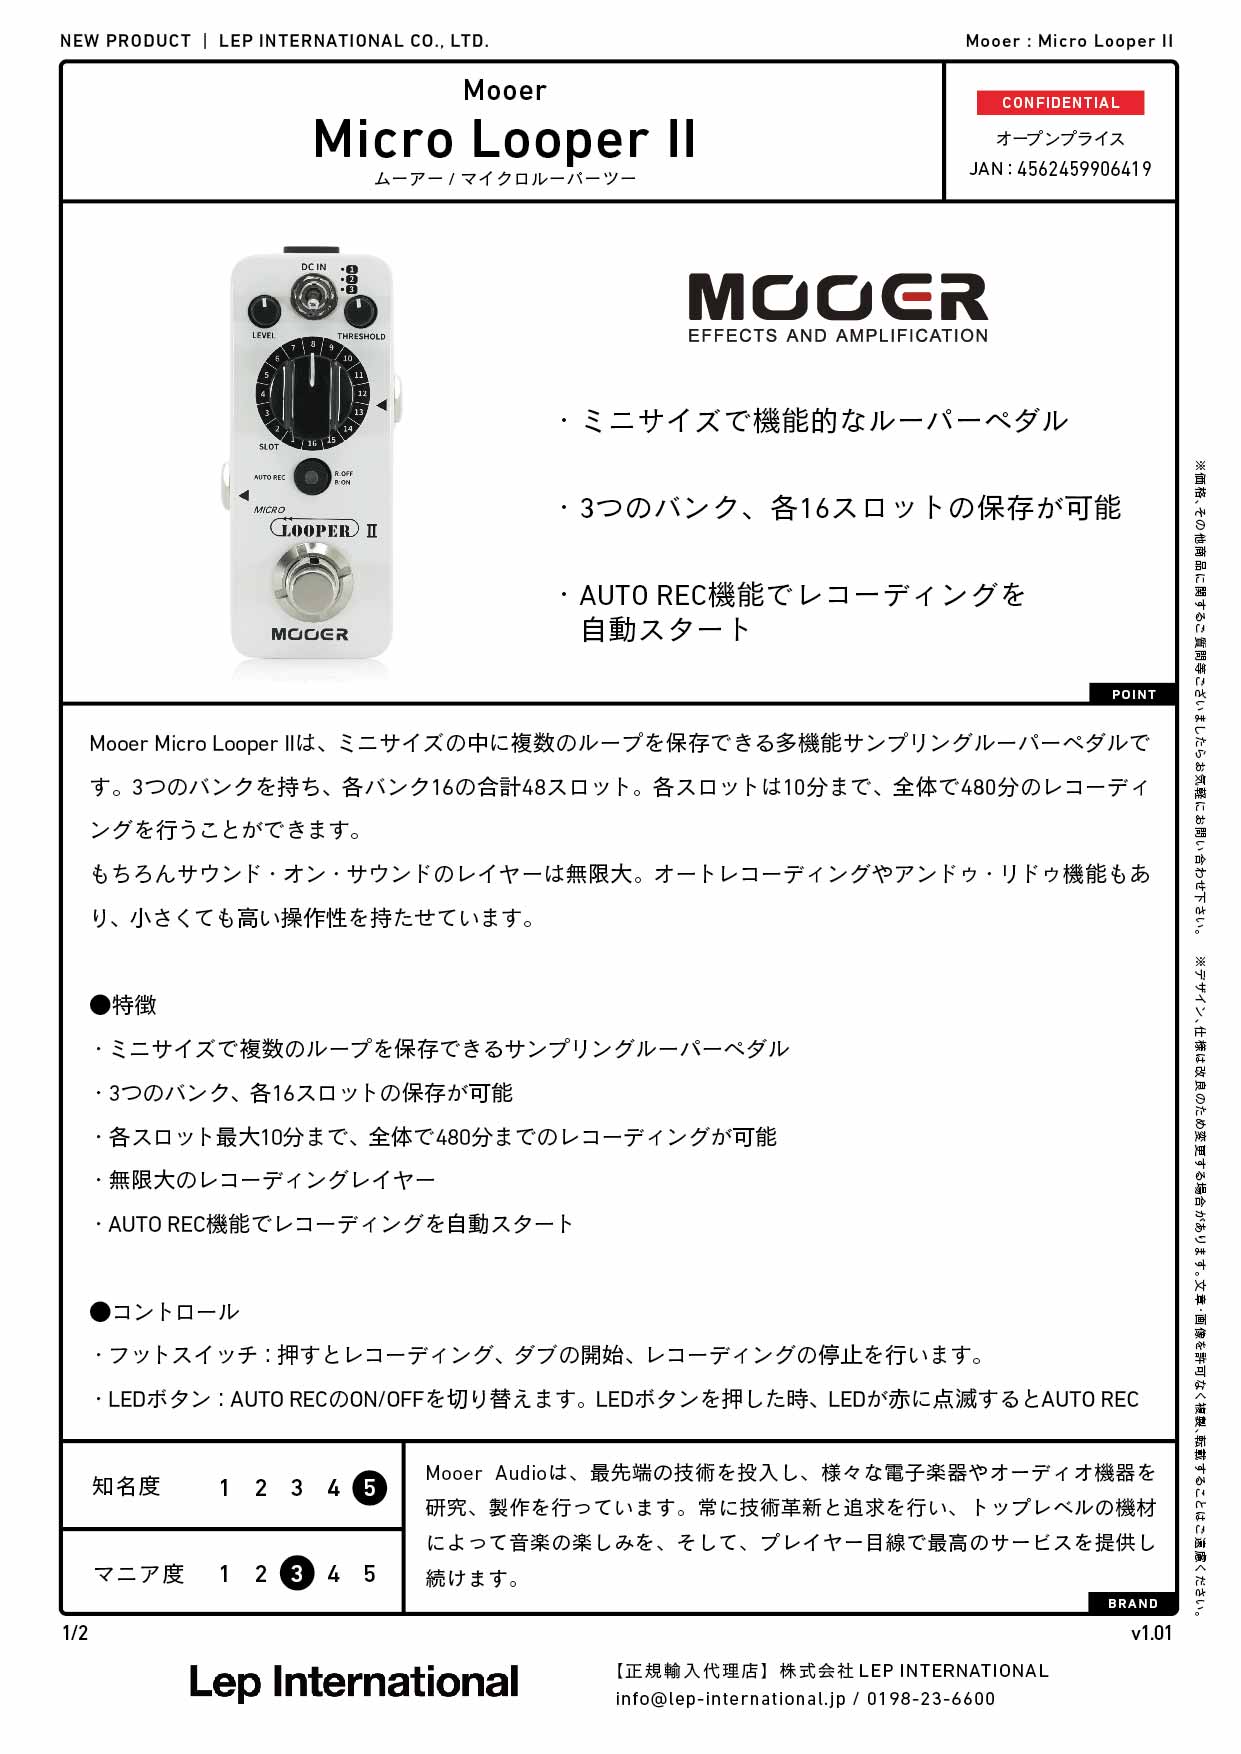 Mooer / Micro Looper II – LEP INTERNATIONAL